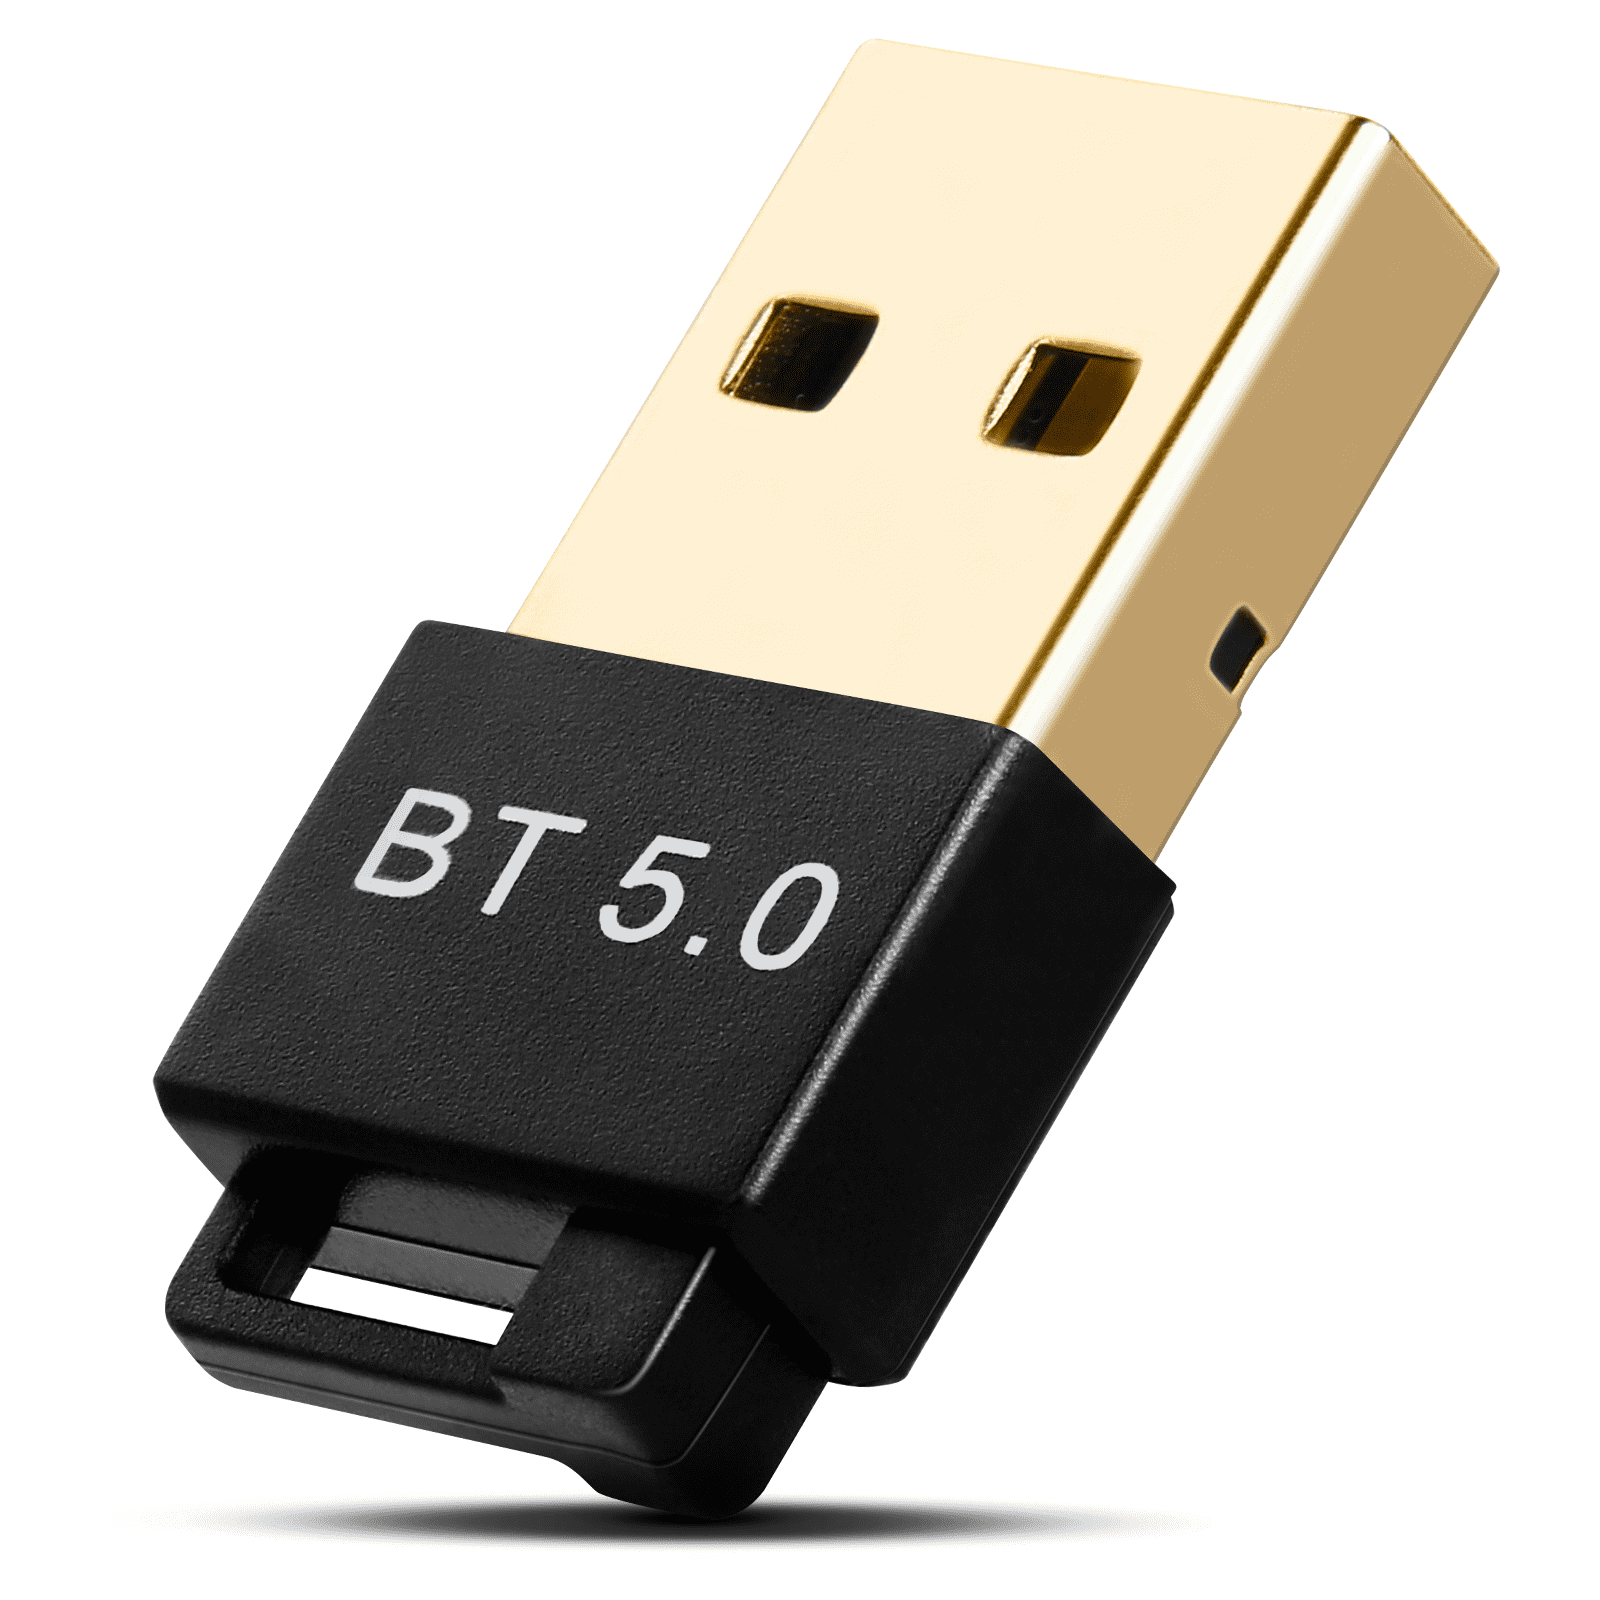 Bluetooth 4.0 Adapter Nano Mini USB 2.0 Stick V4.0 EDR Dongle Windows Win 7 8 10 